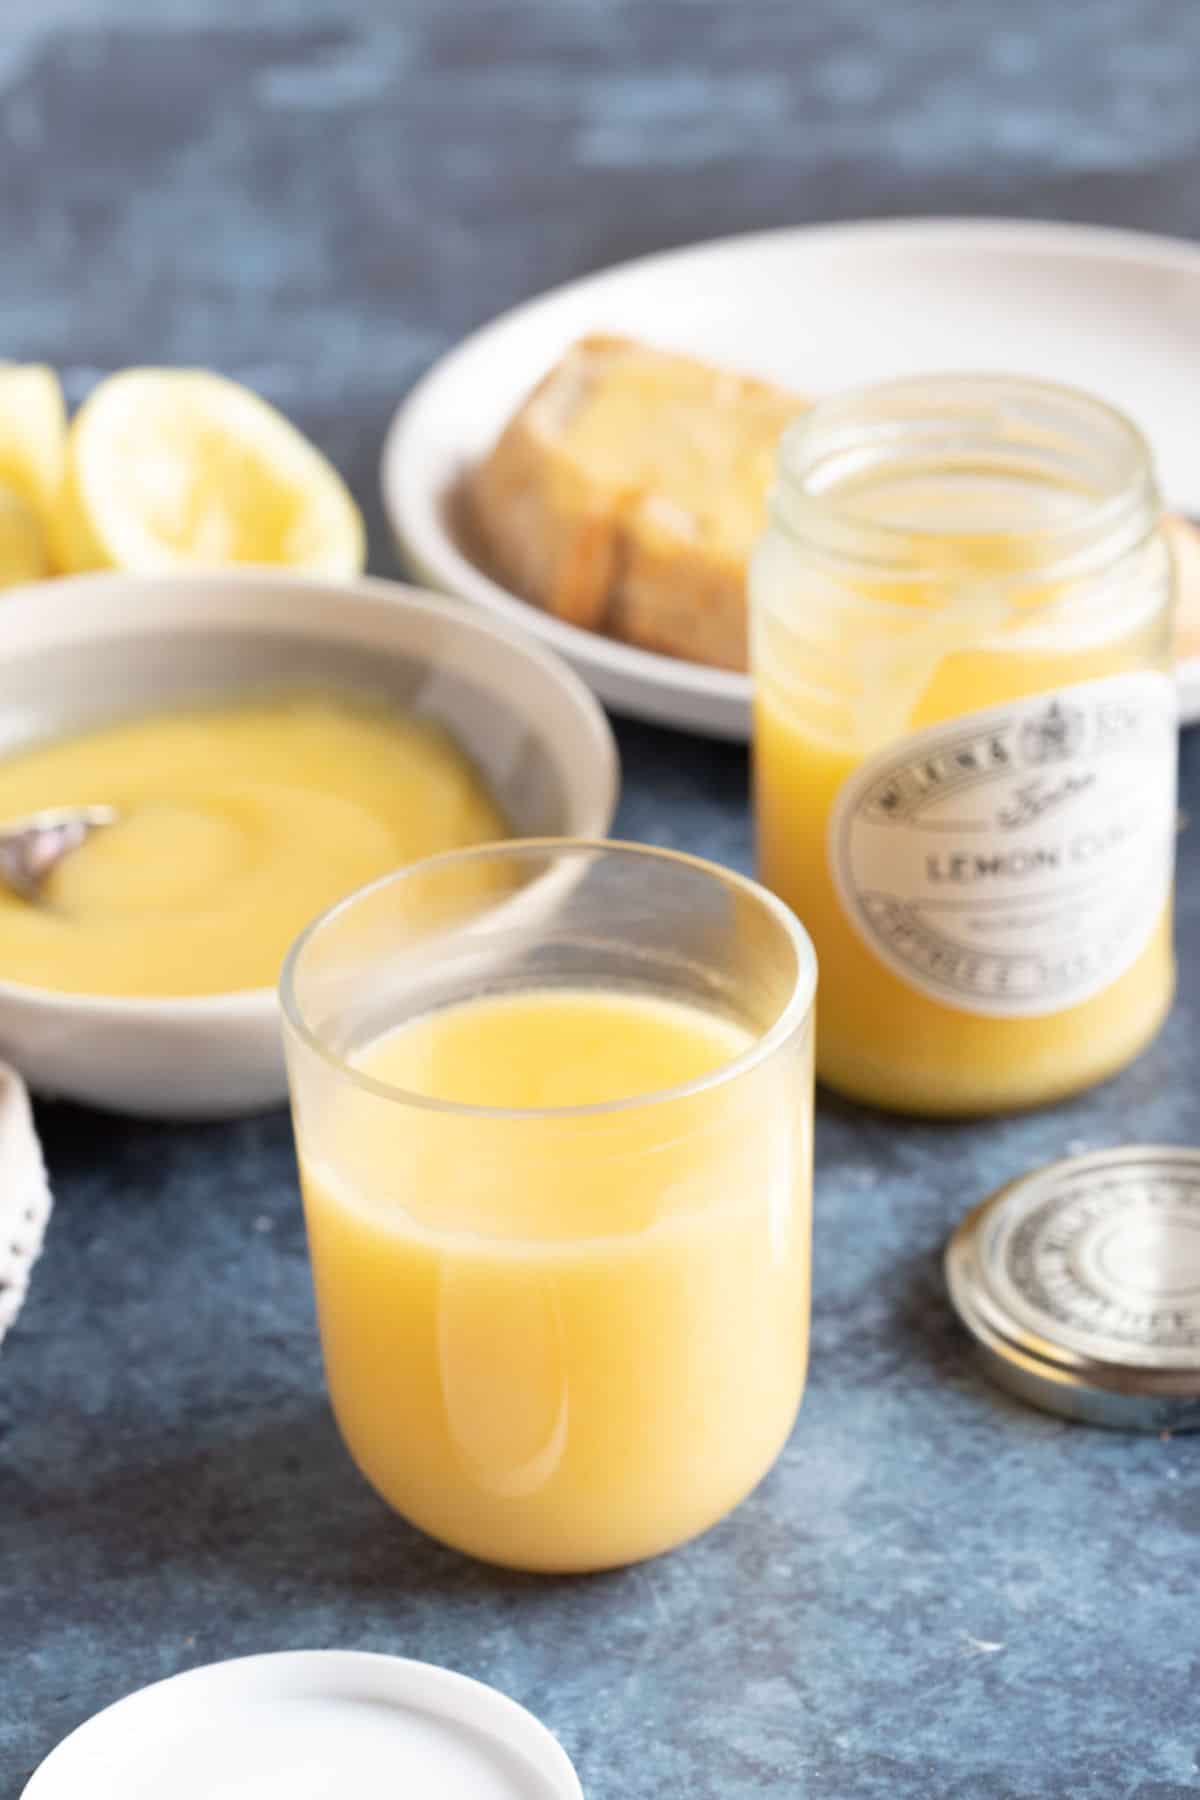 A jar of microwave lemon curd.